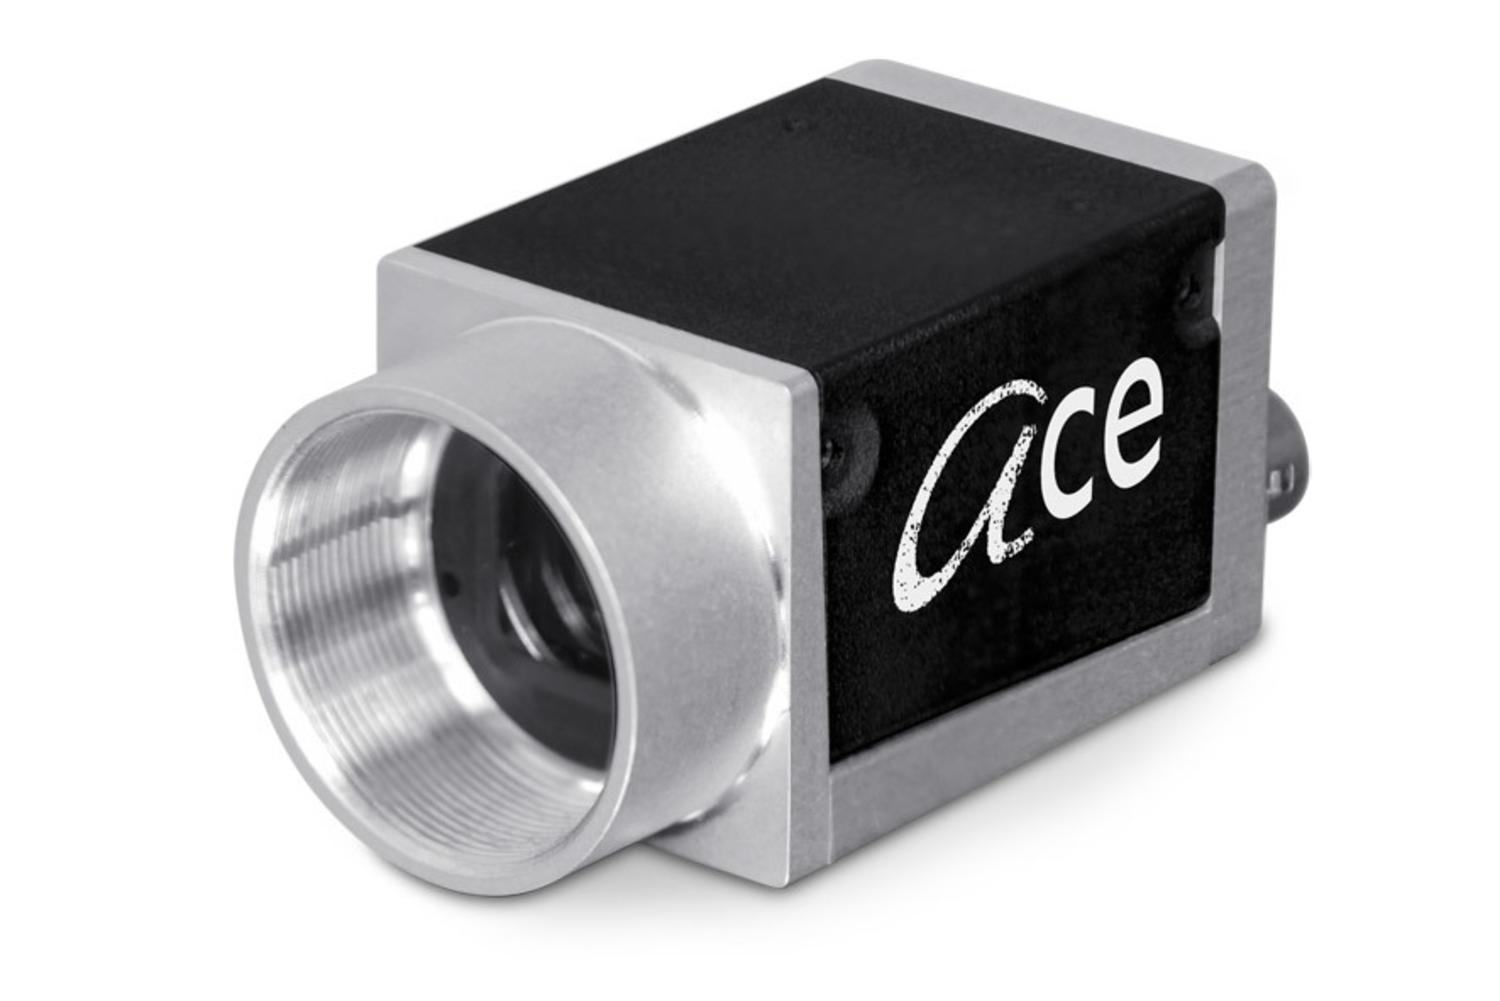 Basler ACE GigE USB3.0 and CameraLink cameras Ace Classic, Ace U